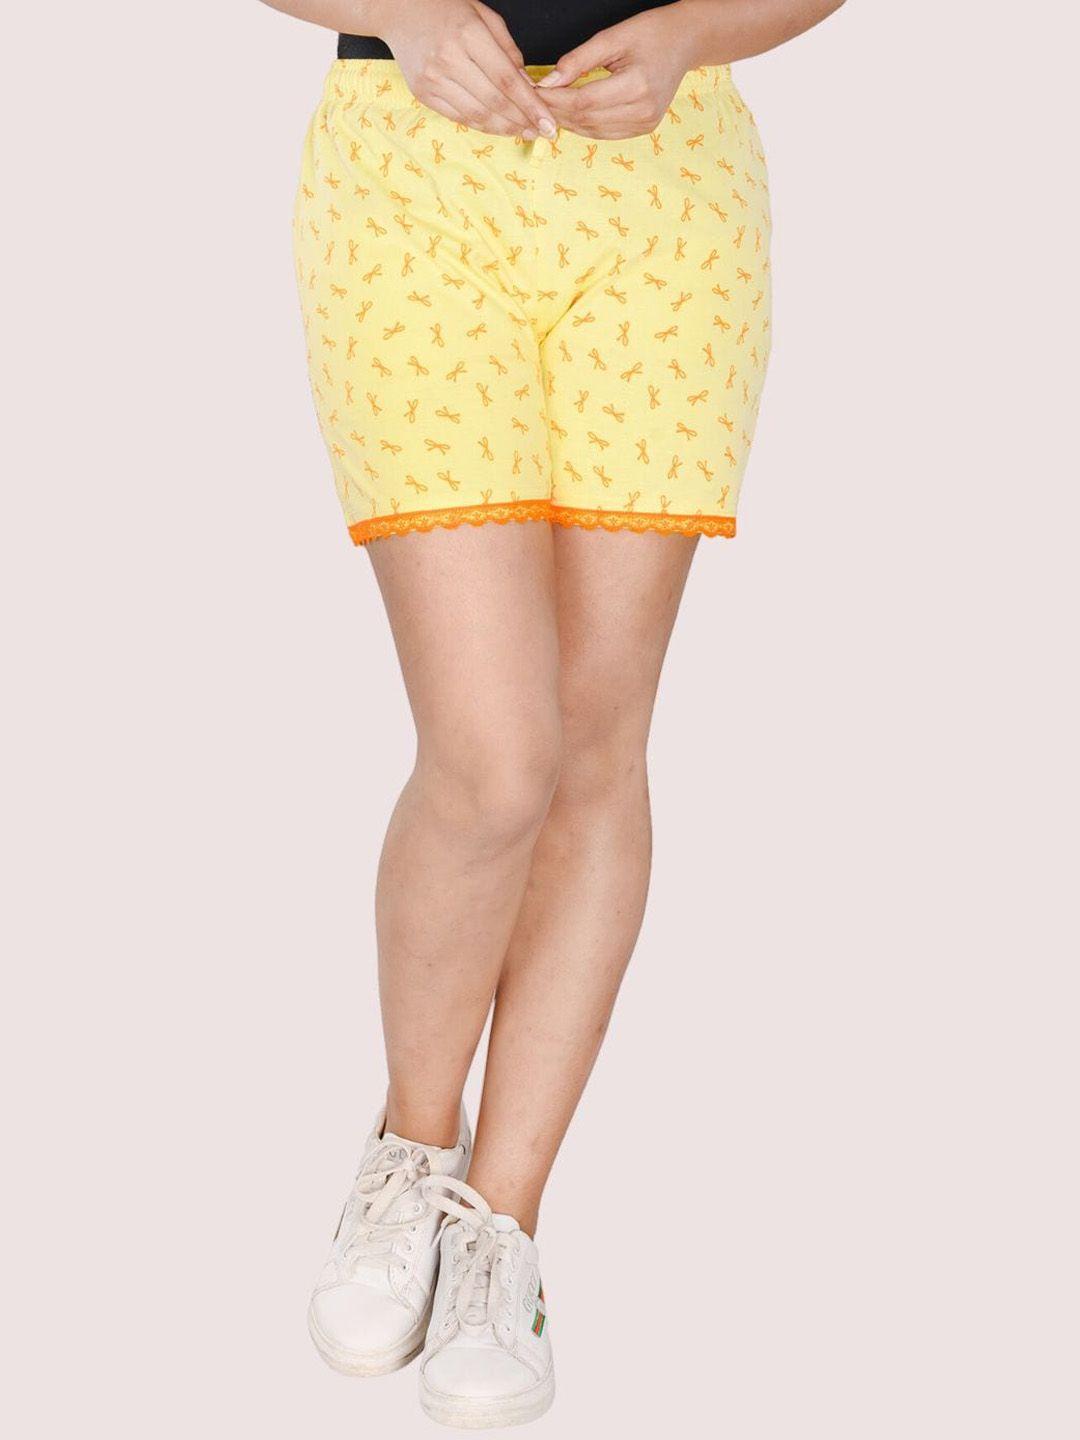 styleaone women orange floral printed yoga shorts